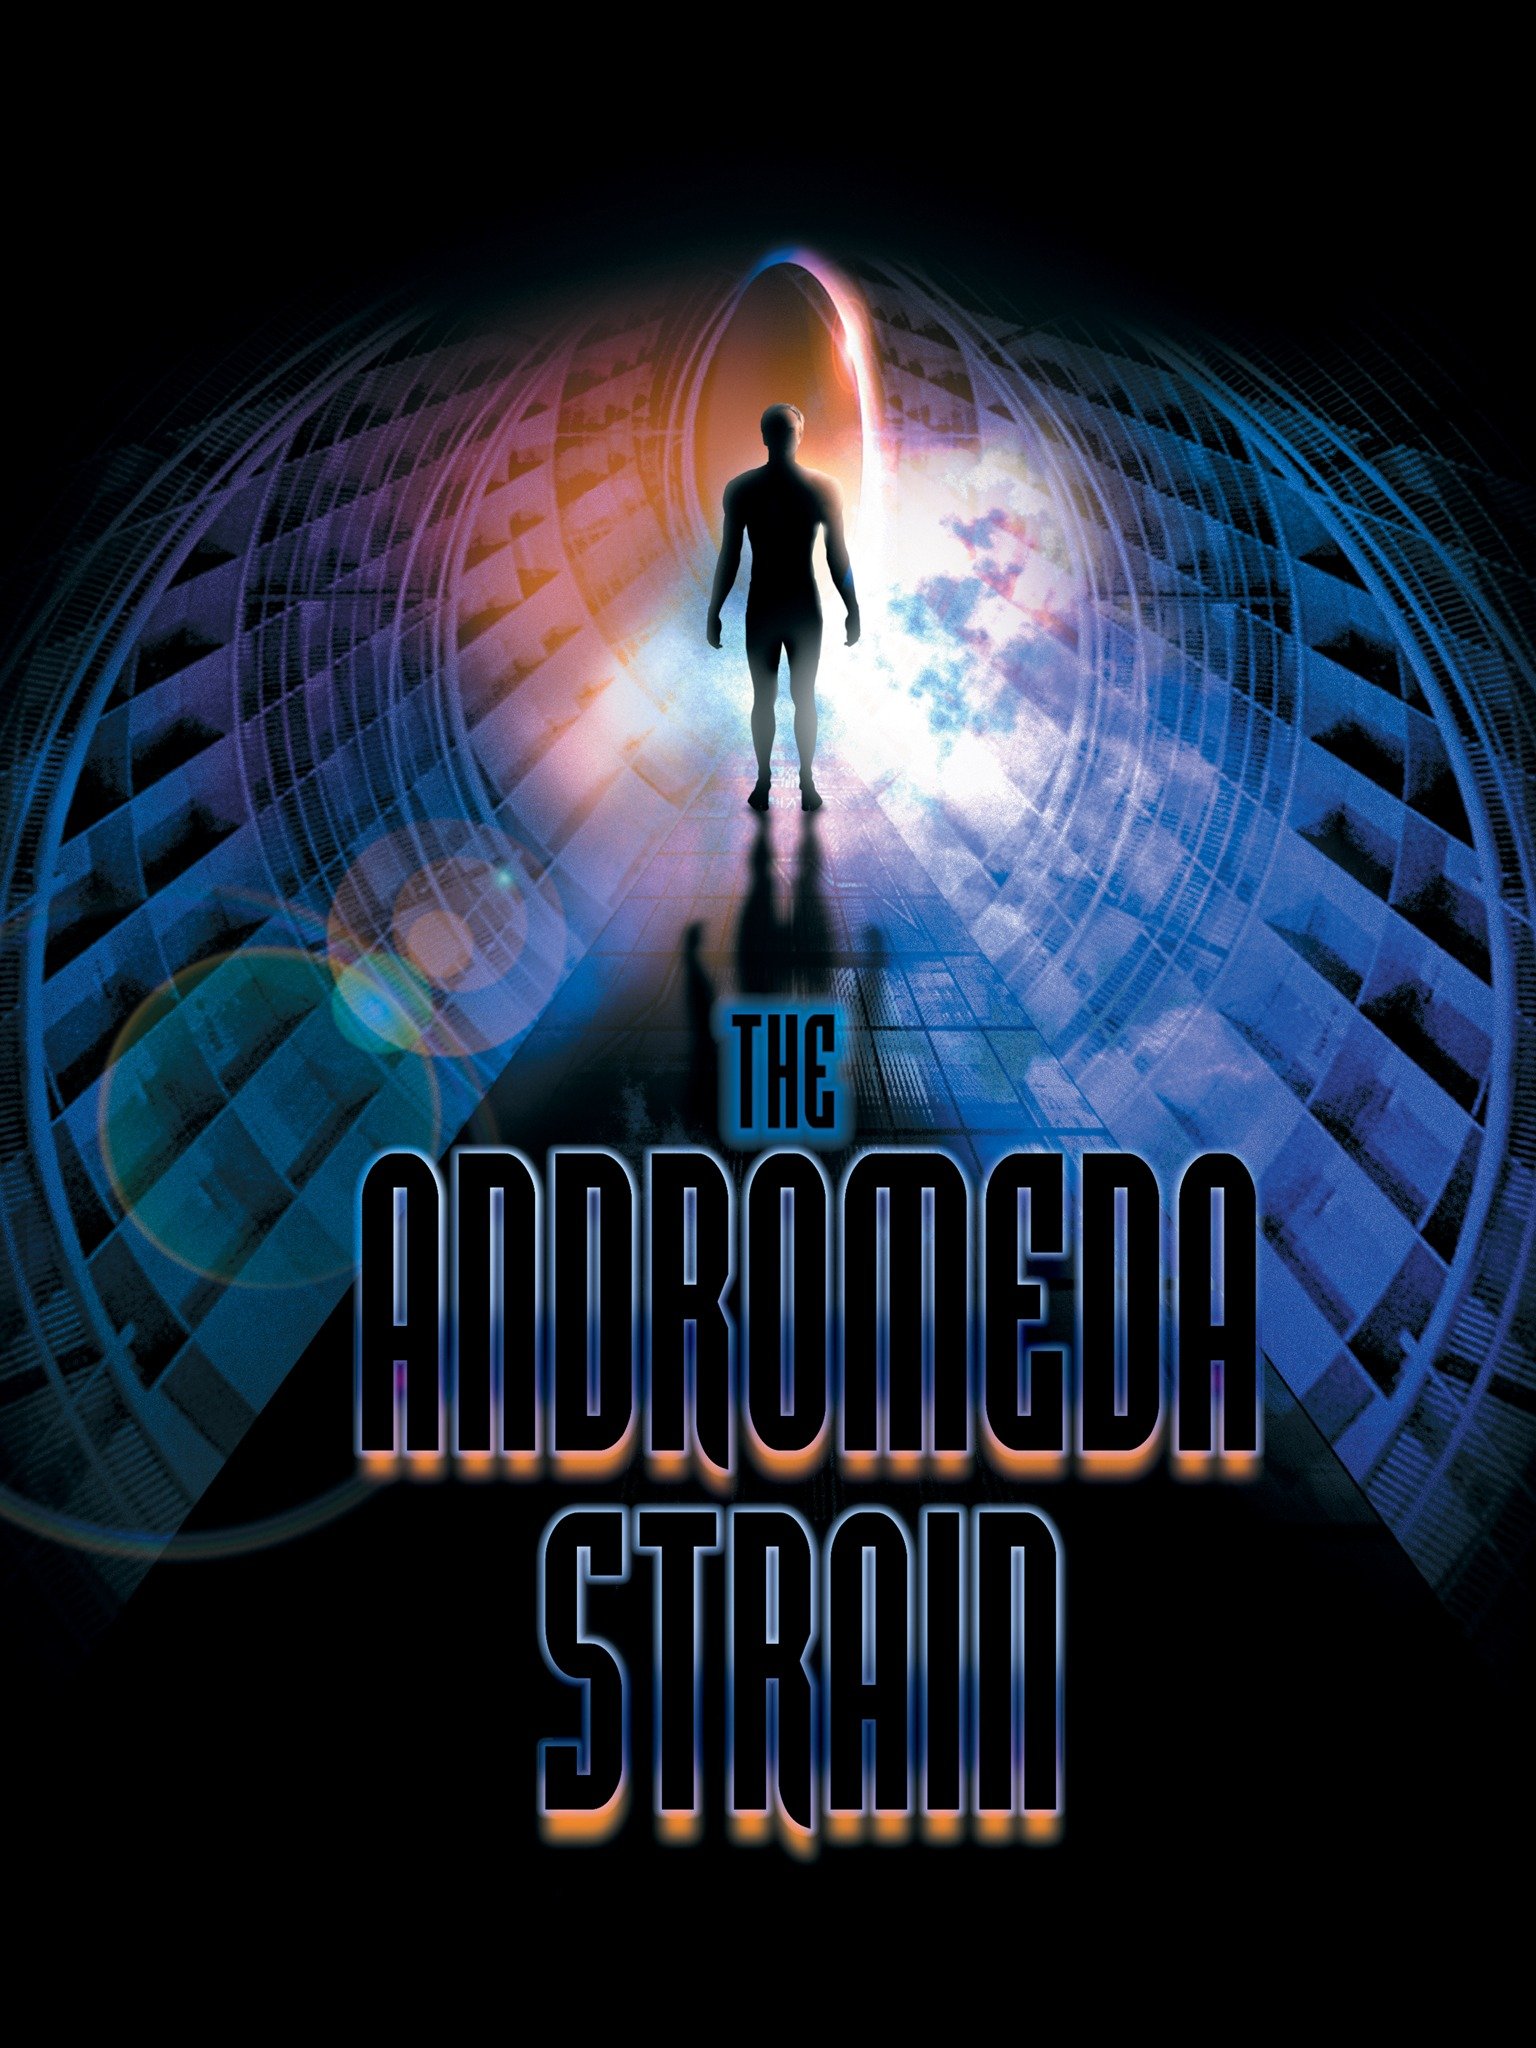 the andromeda strain movie full movie